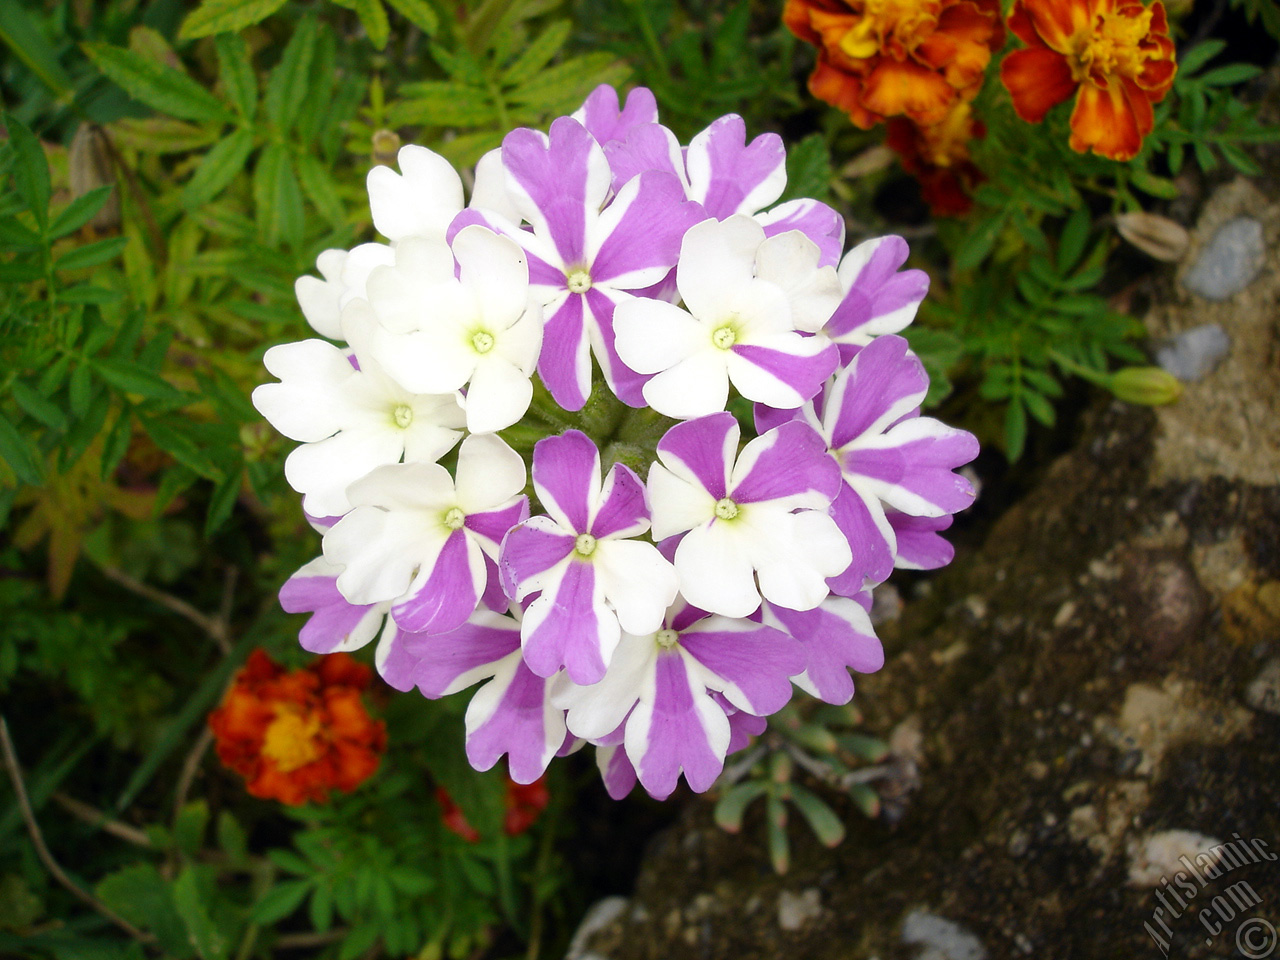 Verbena -Common Vervain- flower.
